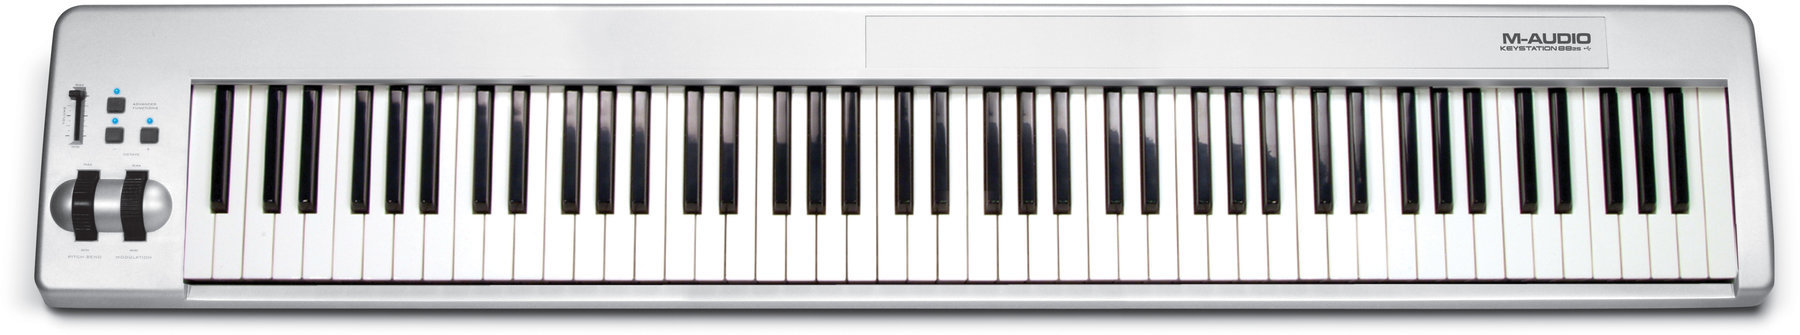 Clavier MIDI M-Audio Keystation 88 es